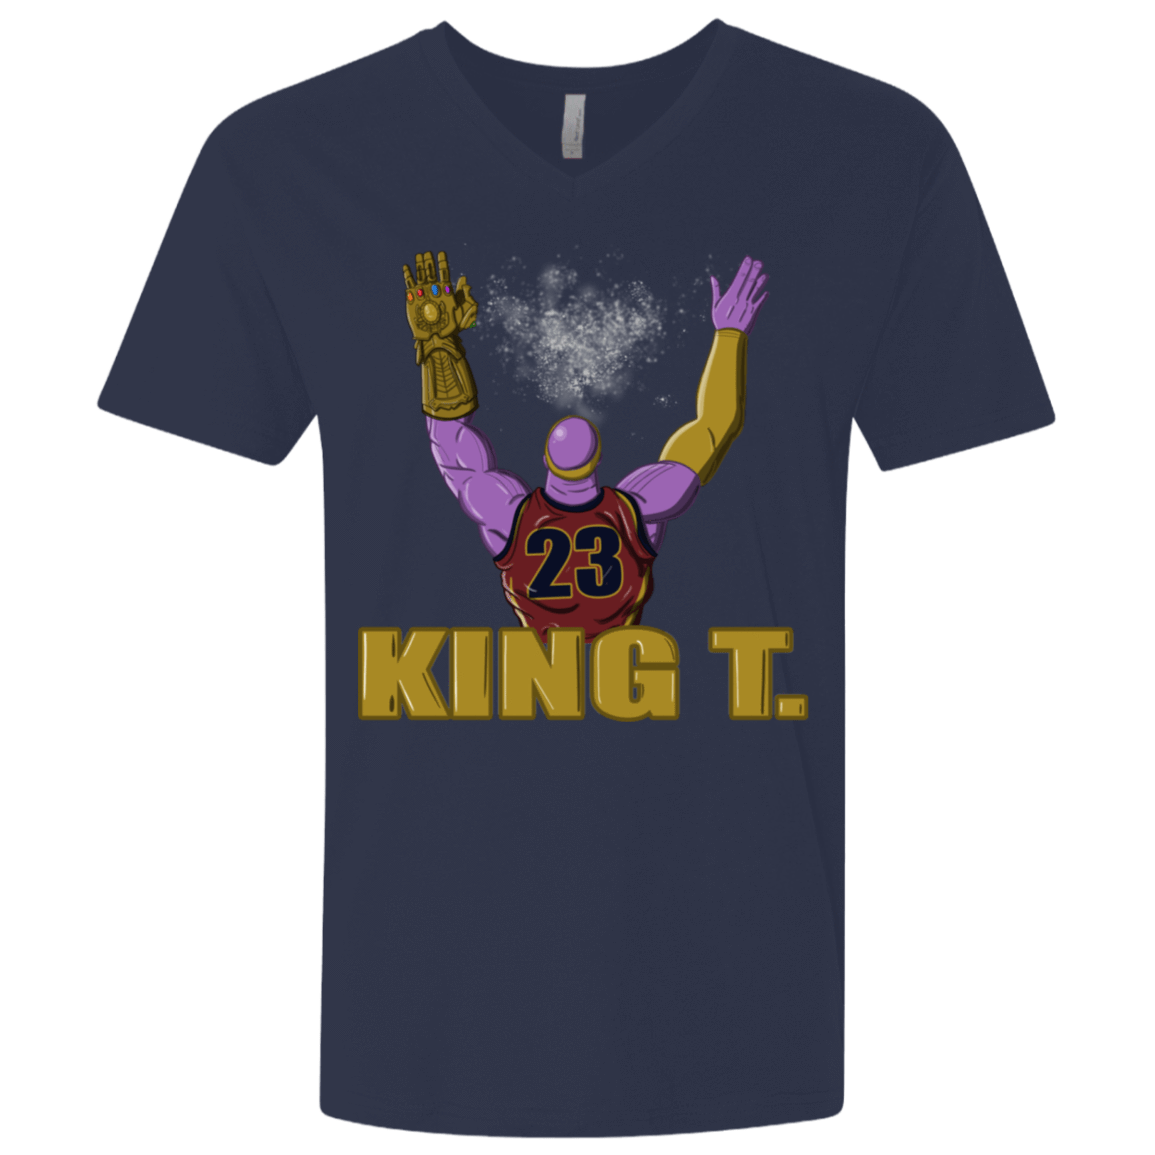 T-Shirts Midnight Navy / X-Small King Thanos Men's Premium V-Neck